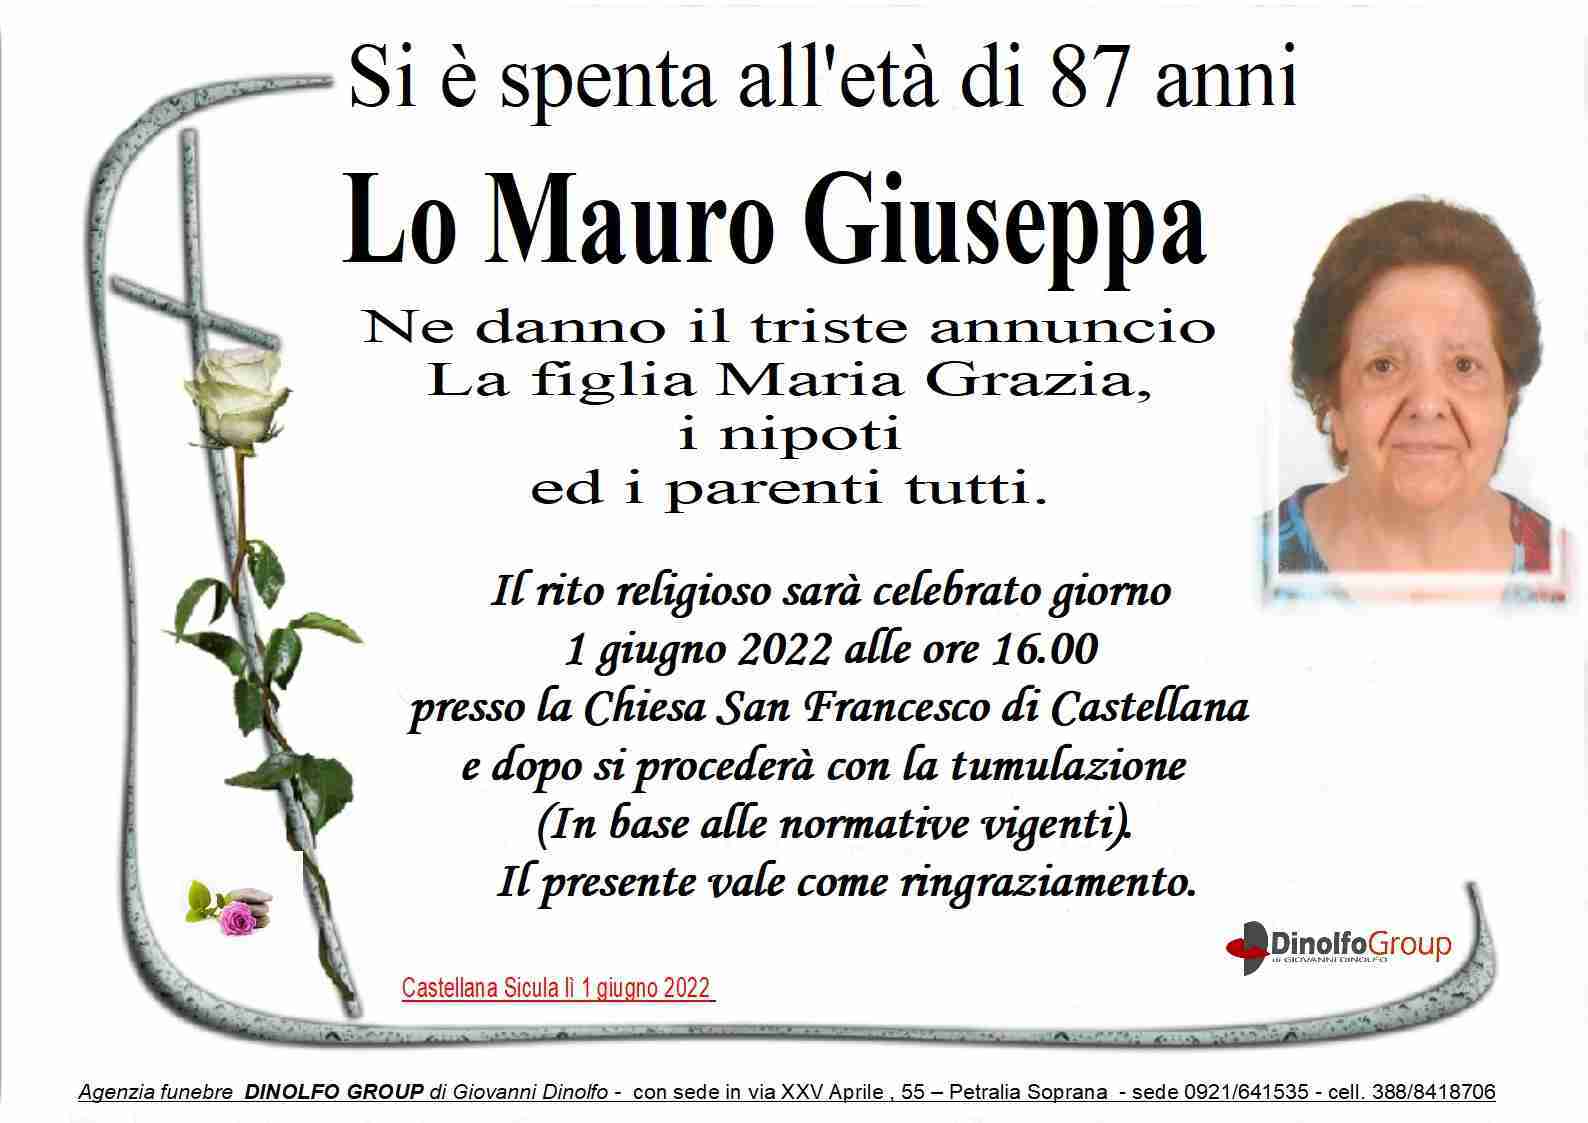 Giuseppa Lo Mauro